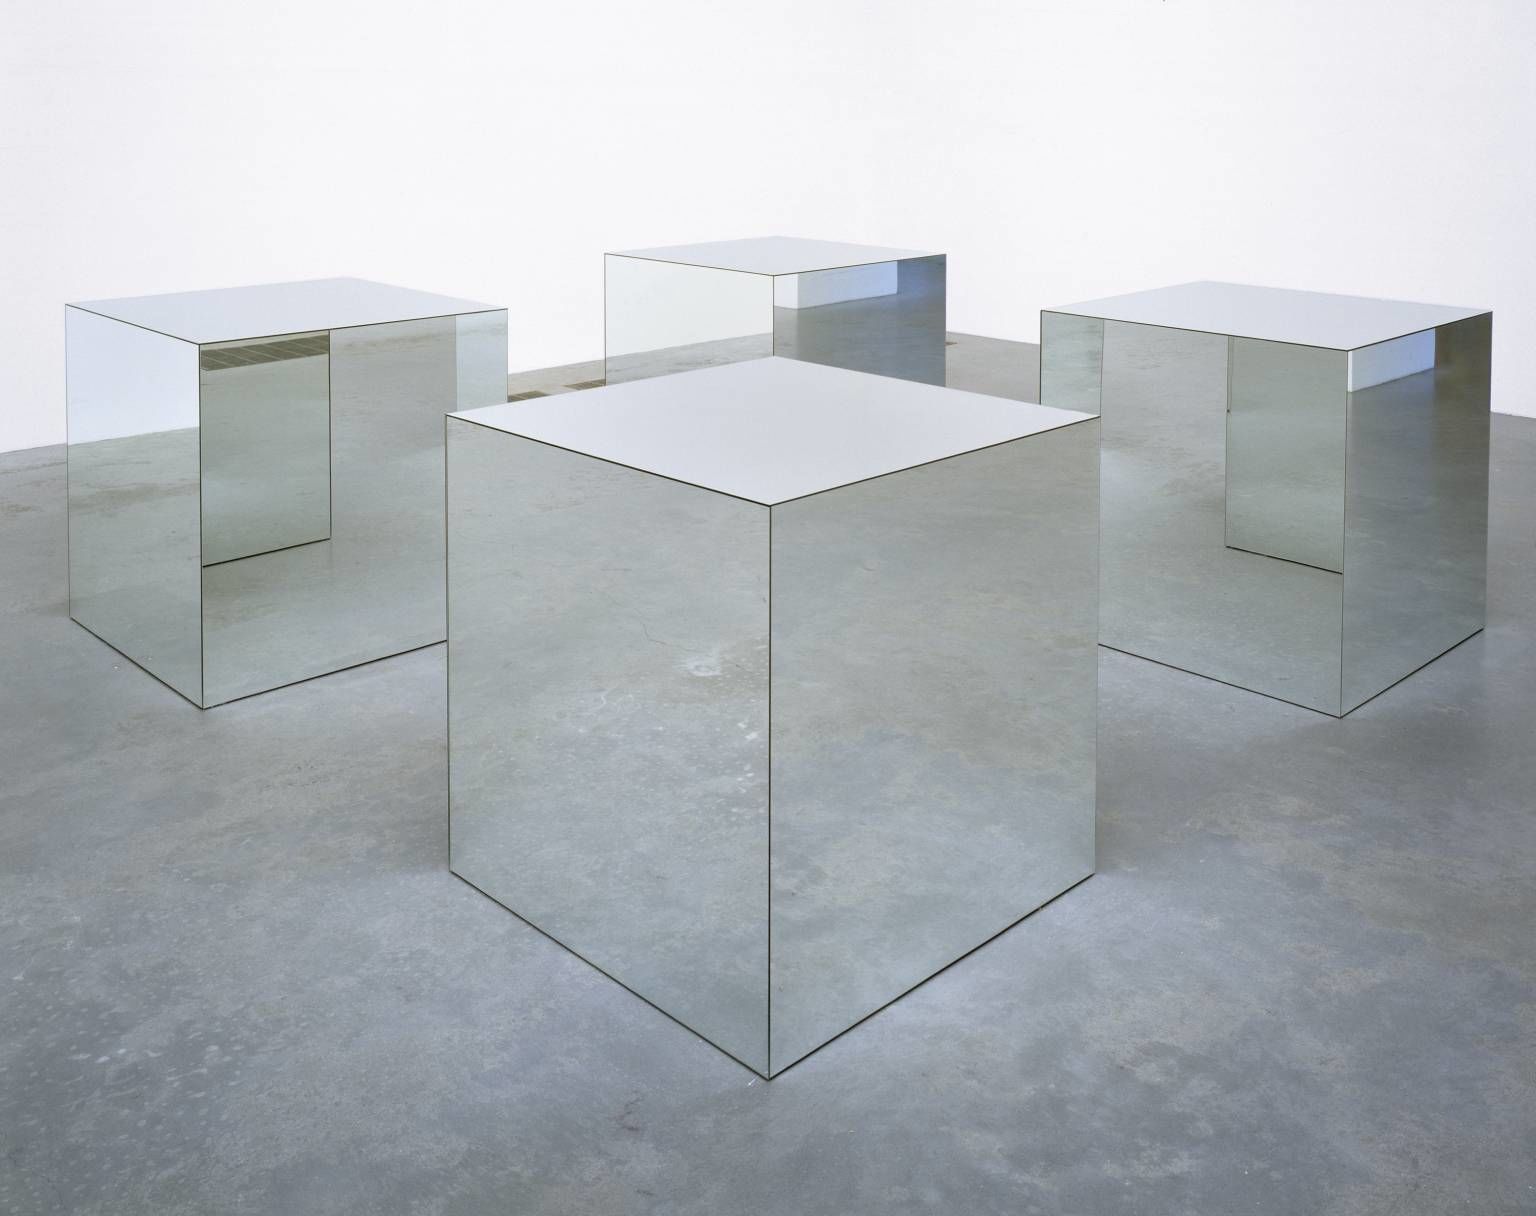 Robert Morris. Untitled. 1965, reconstructed 1971. Mirror glass, wood. 91.4 x 91.4 x 91.4 cm